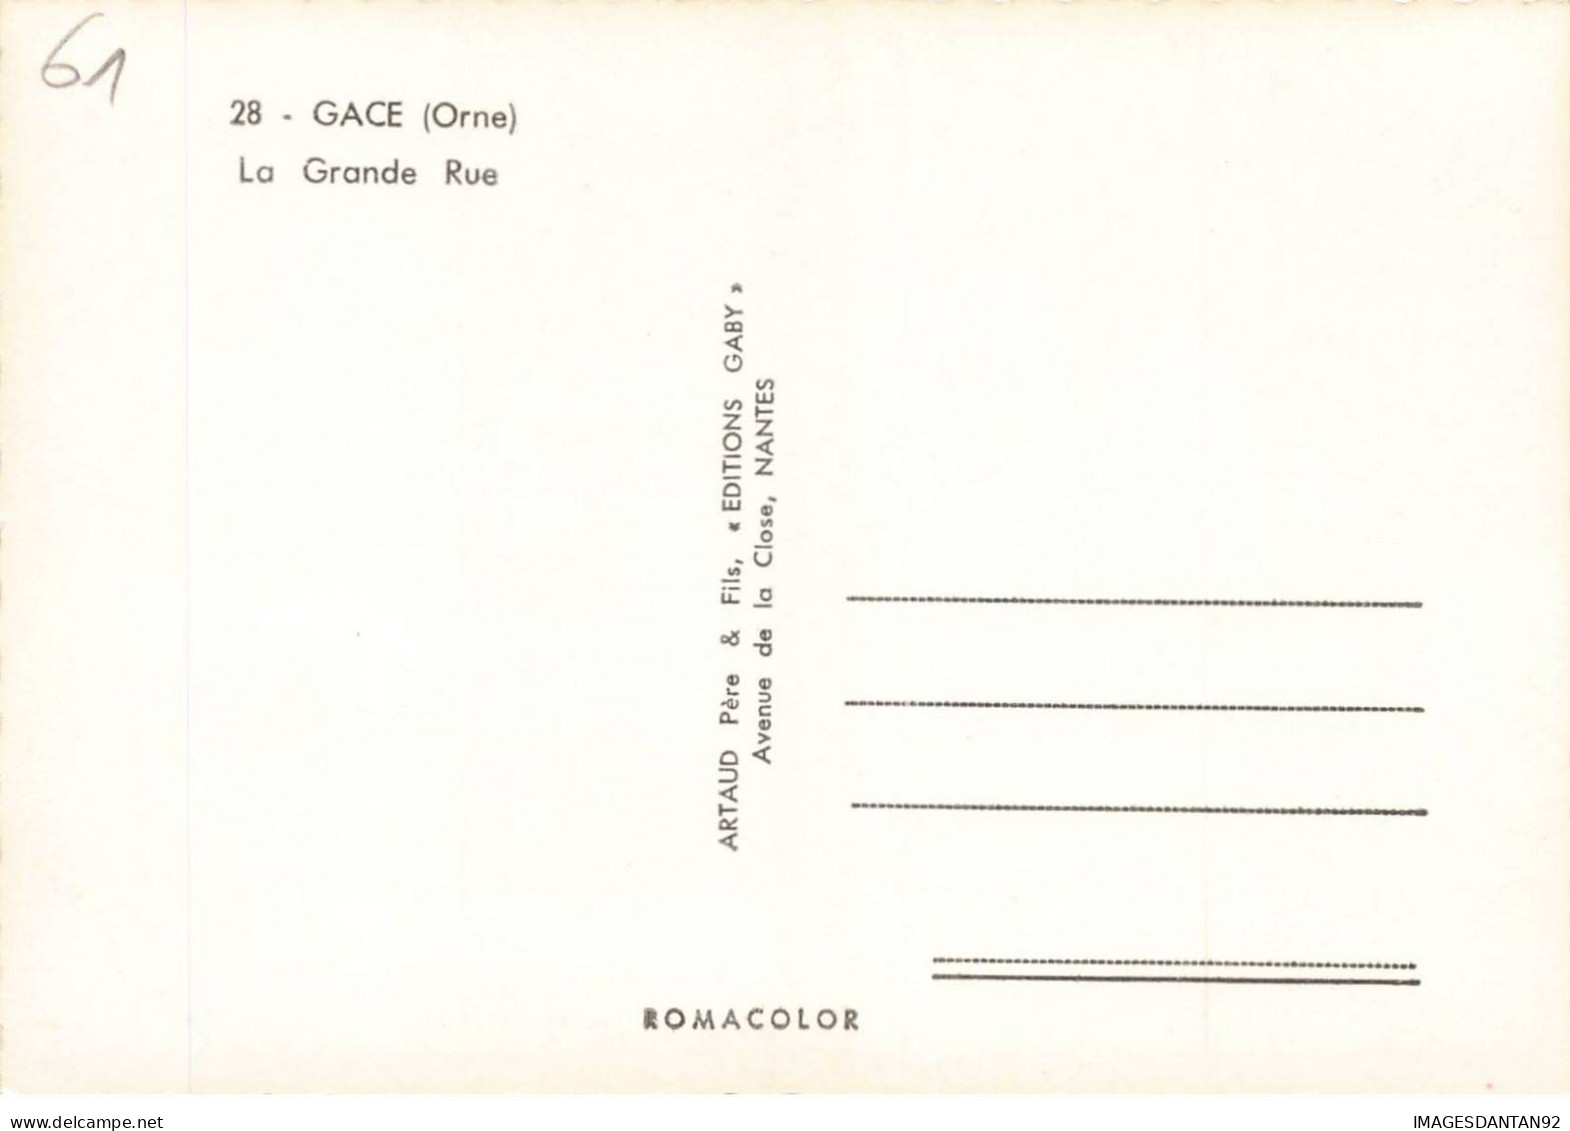 61 GACE AE#DC455 LA GRANDE RUE CAFE TABAC - Gace